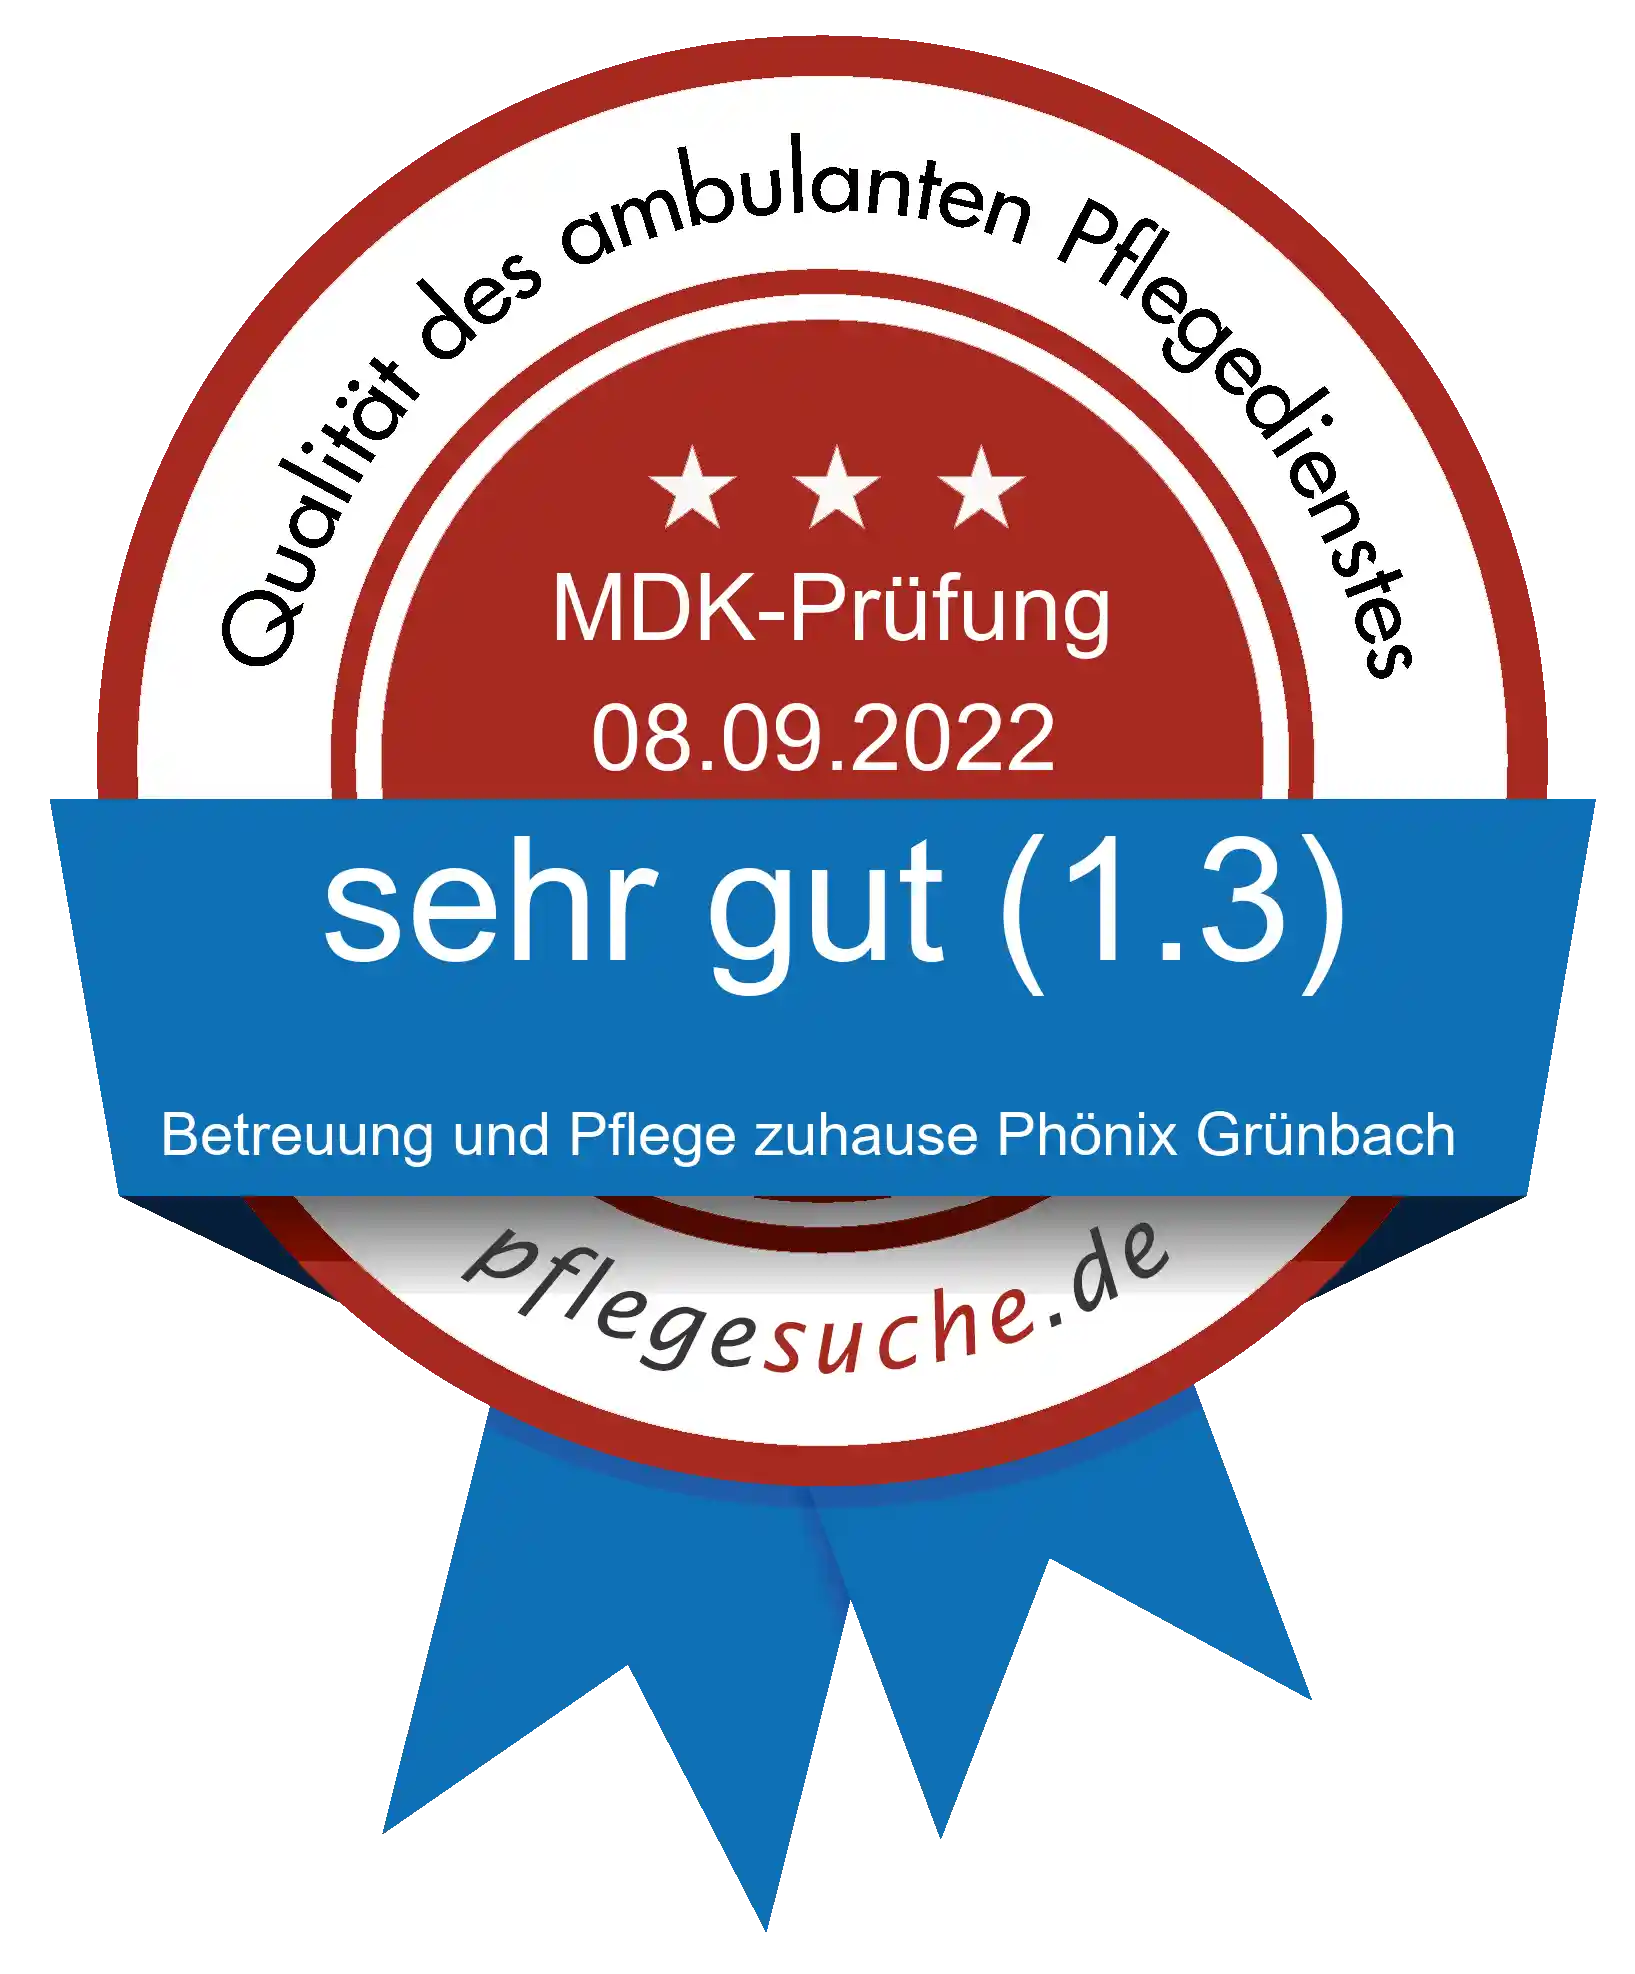 Siegel Benotung: Betreuung und Pflege zuhause Phönix Grünbach